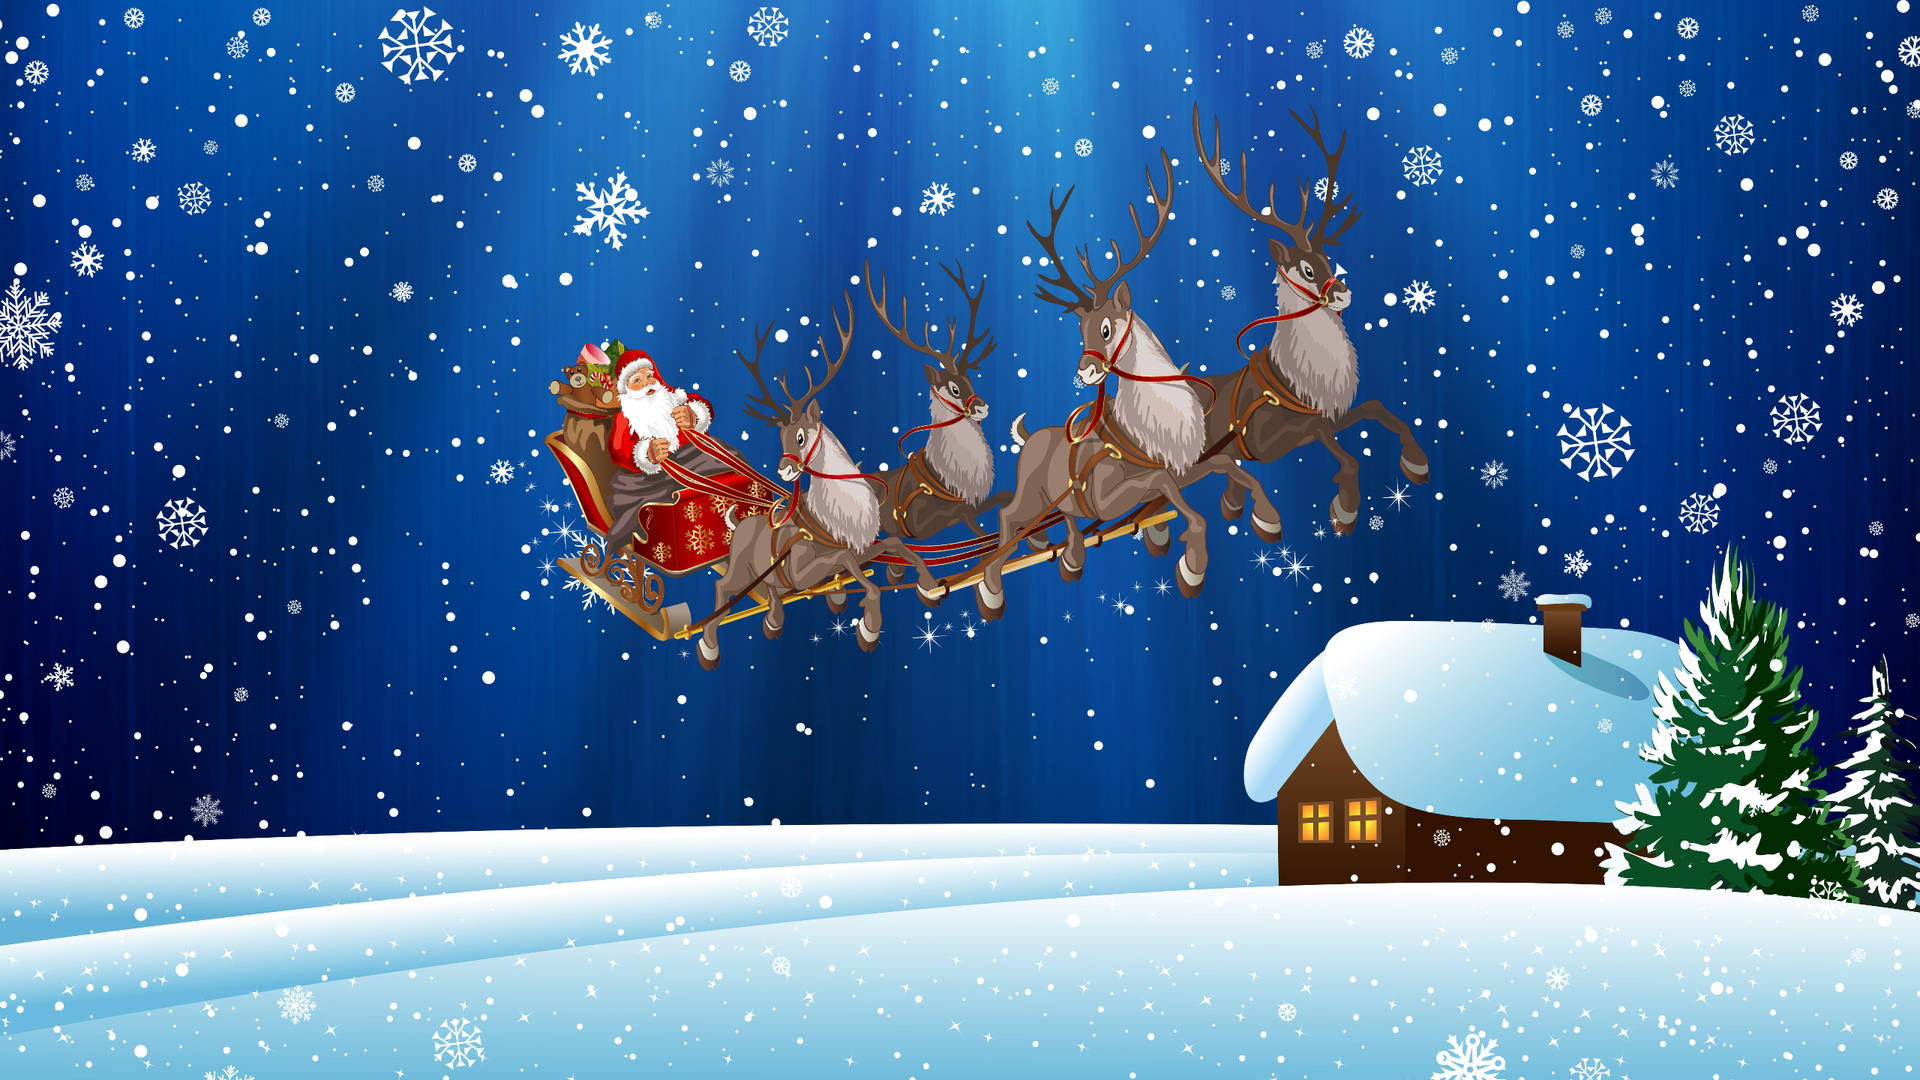 Santa Claus Flying With Reindeers